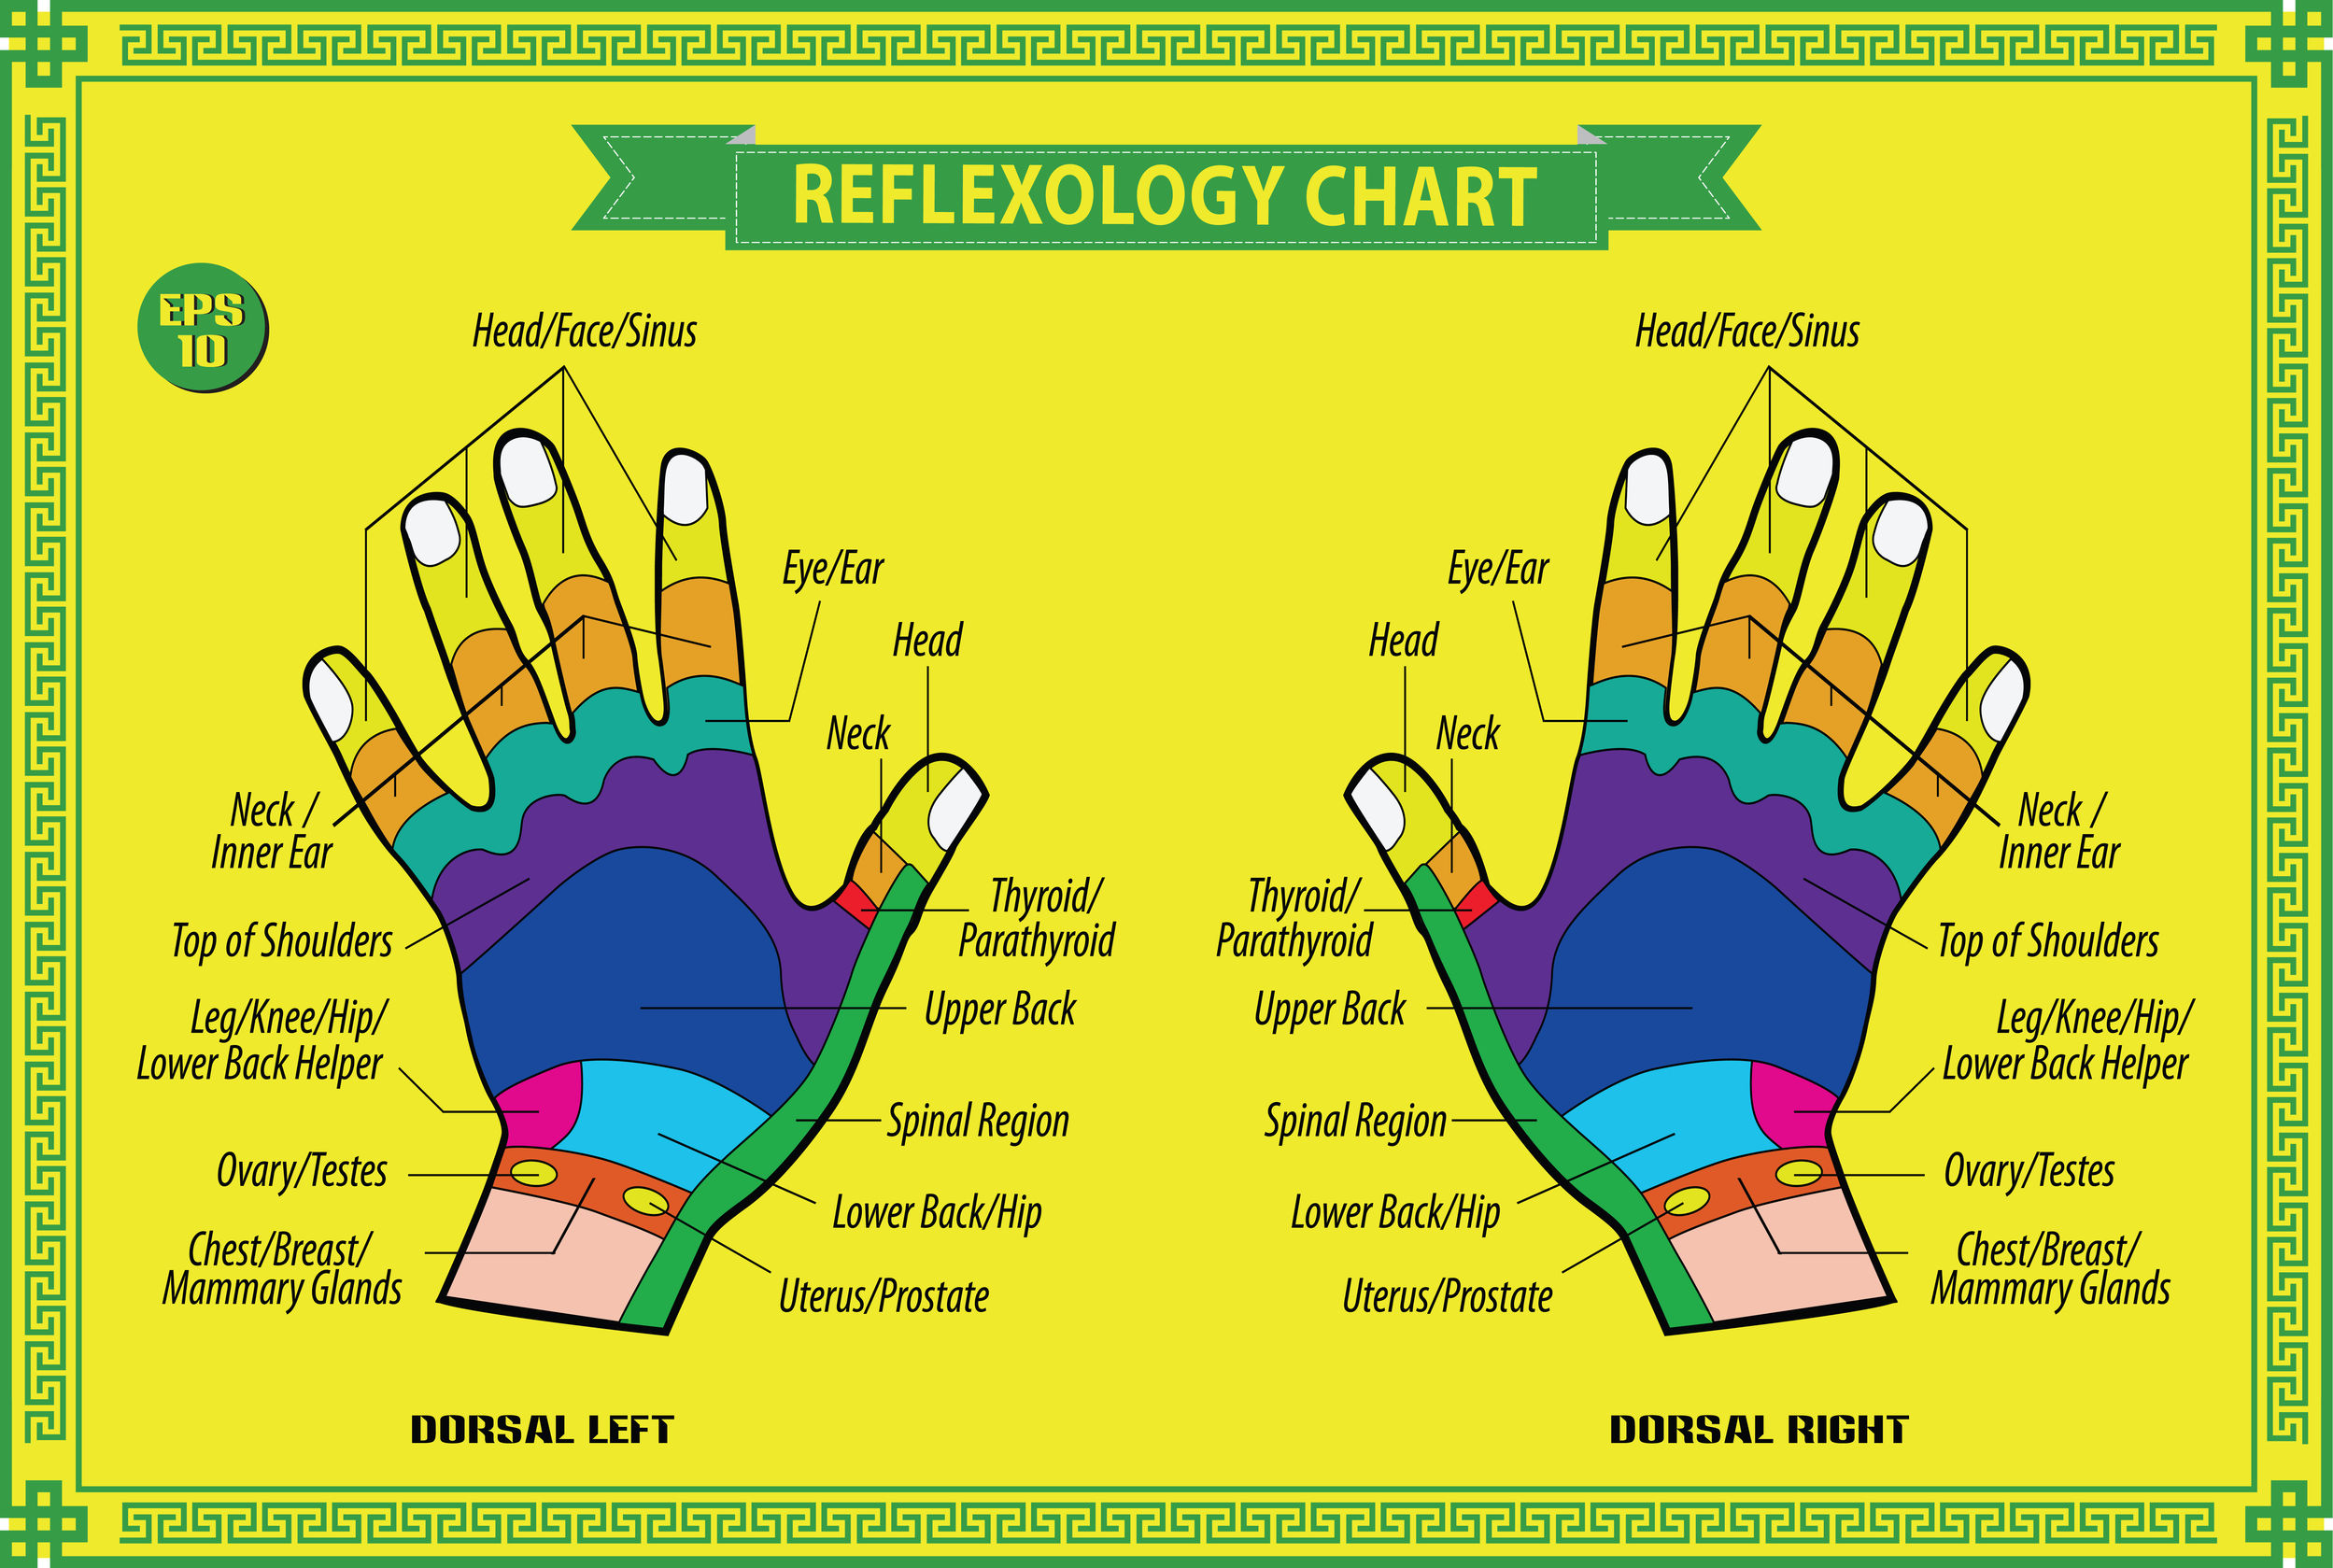 Free chart sexual hand reflexology